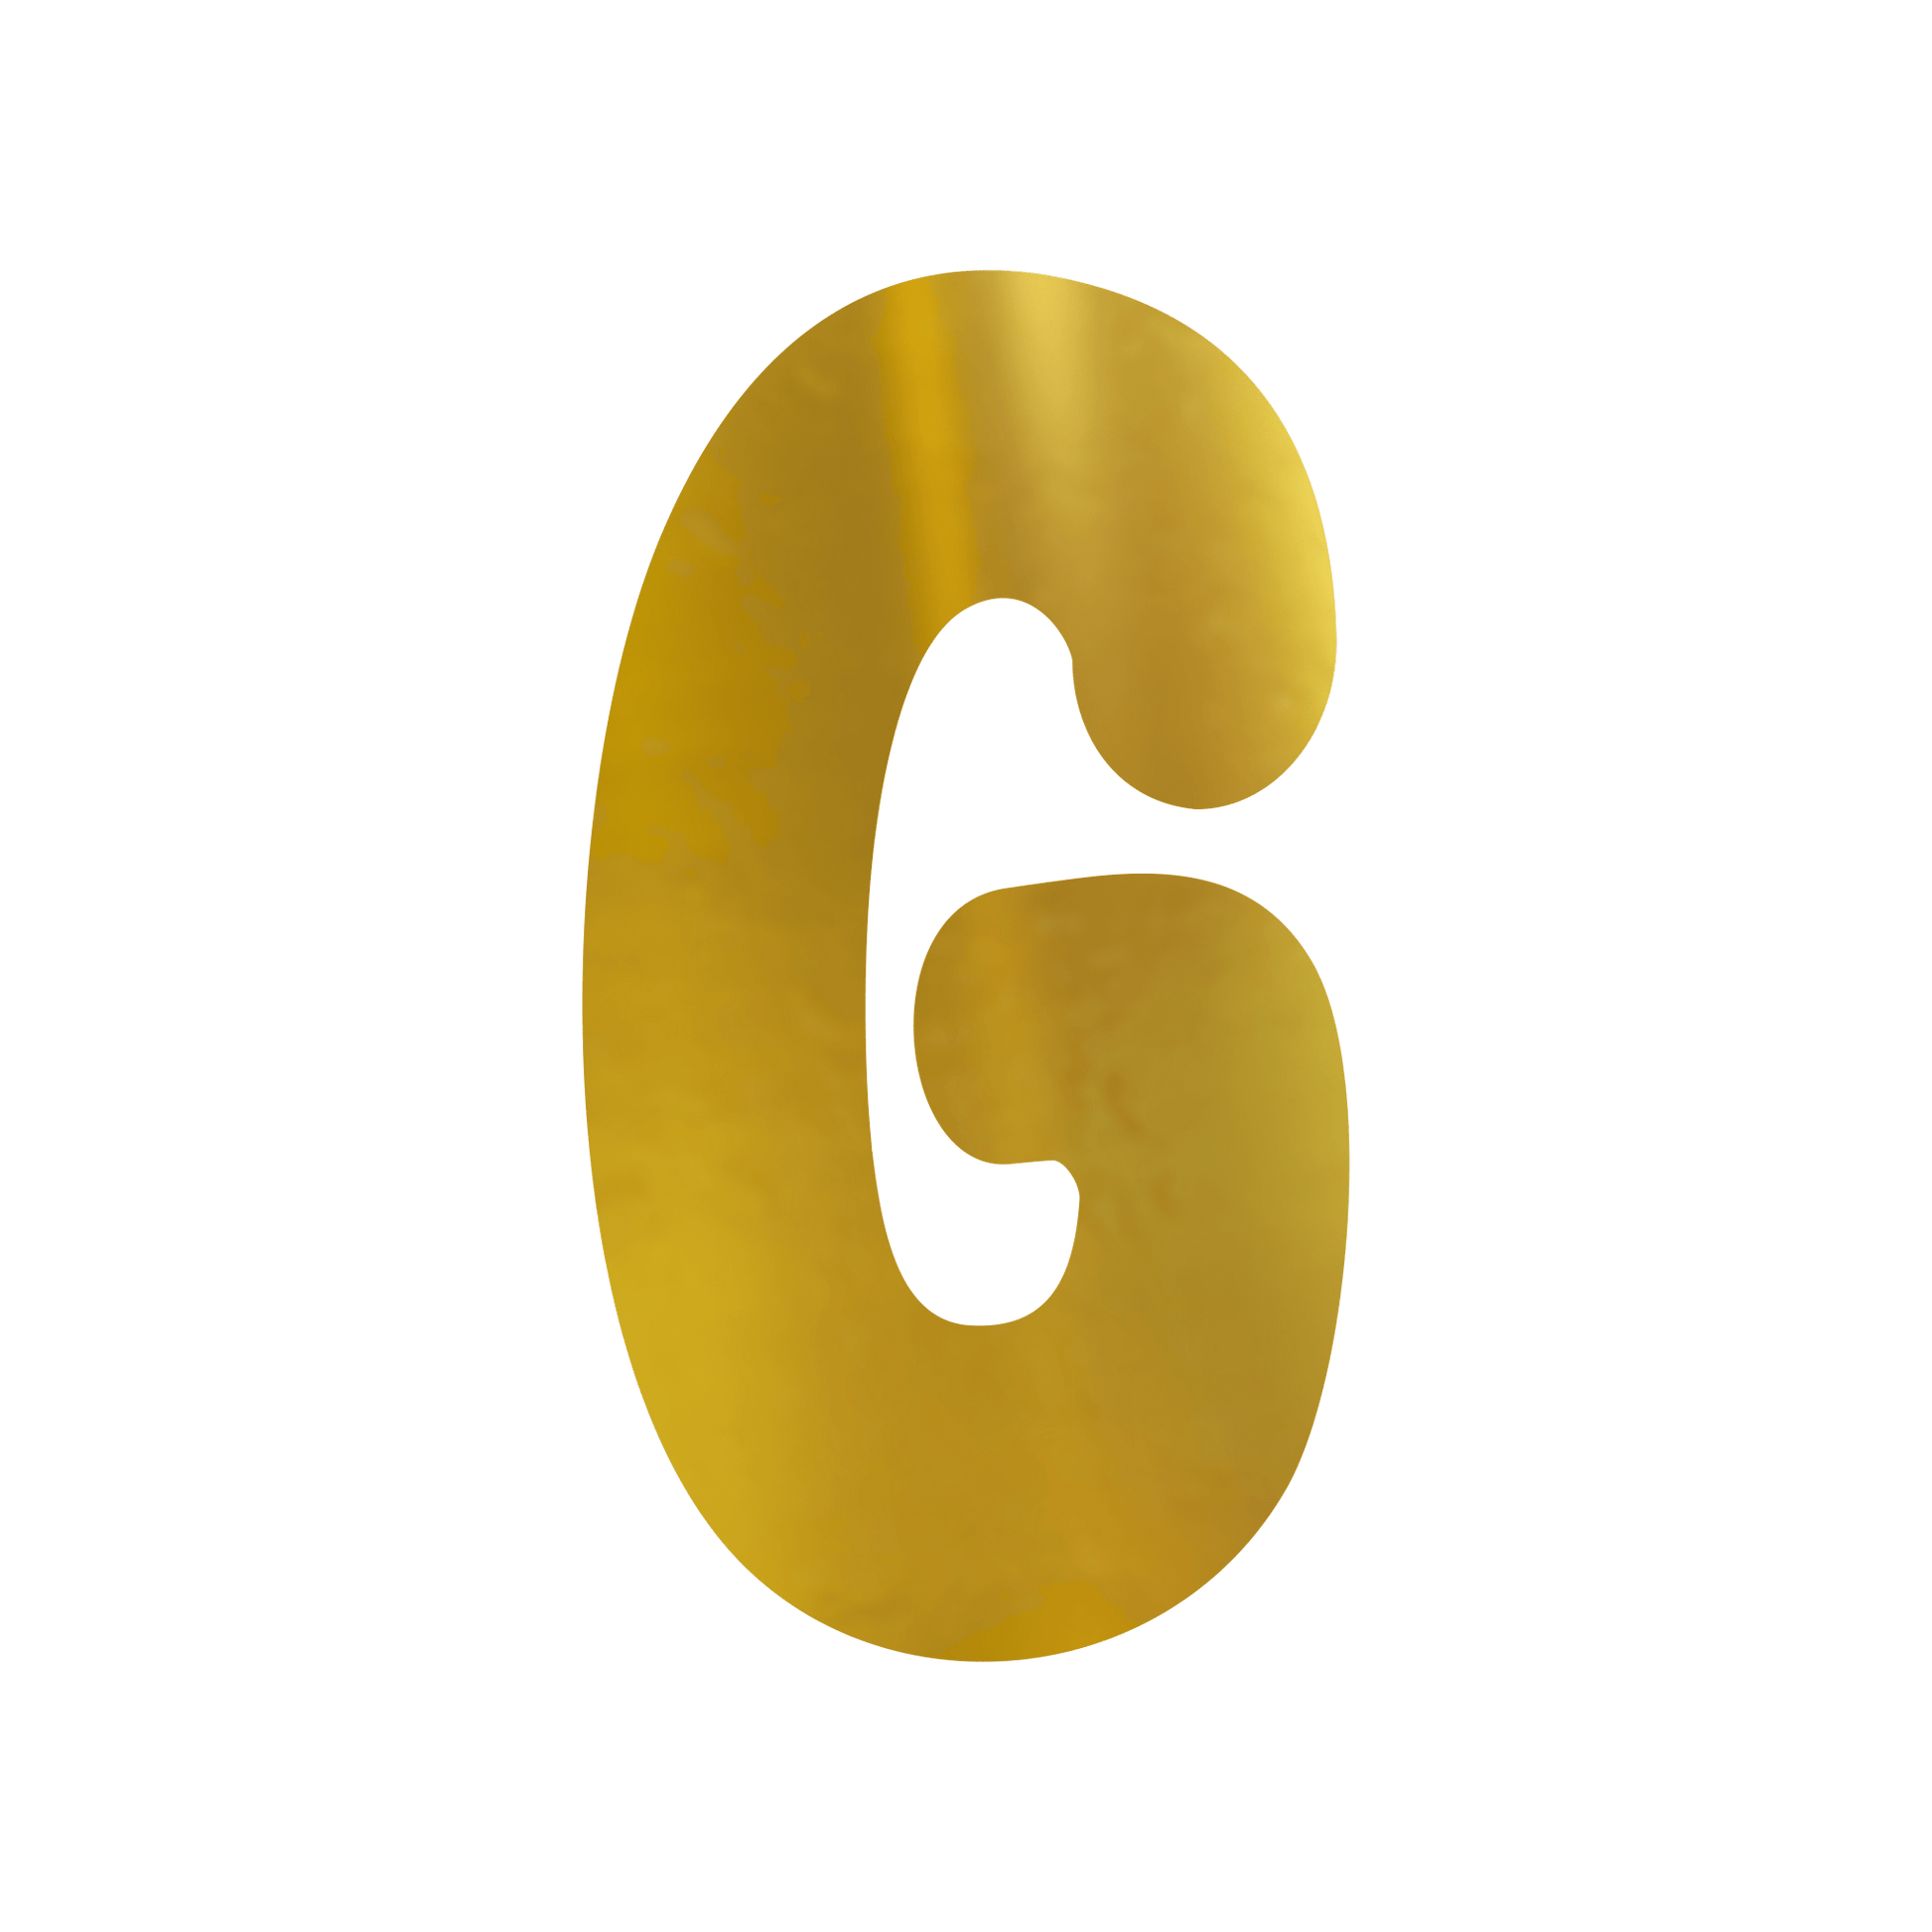 Comemoratio G Letra de Papel Metalizada 15,3 cm Dourada - G2 - 01 un.